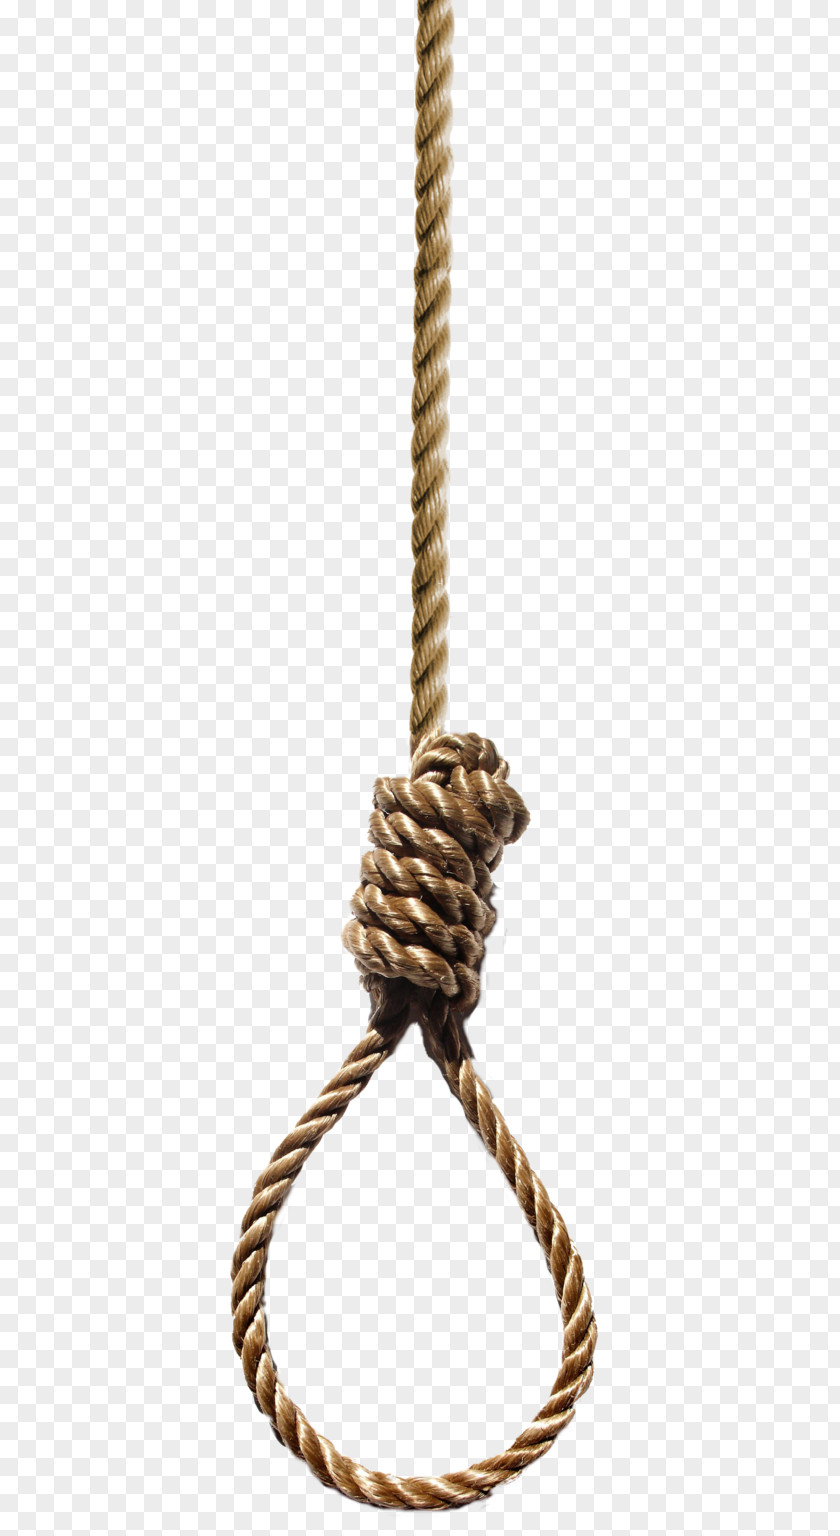 Rope Noose Hangman's Knot Clip Art PNG